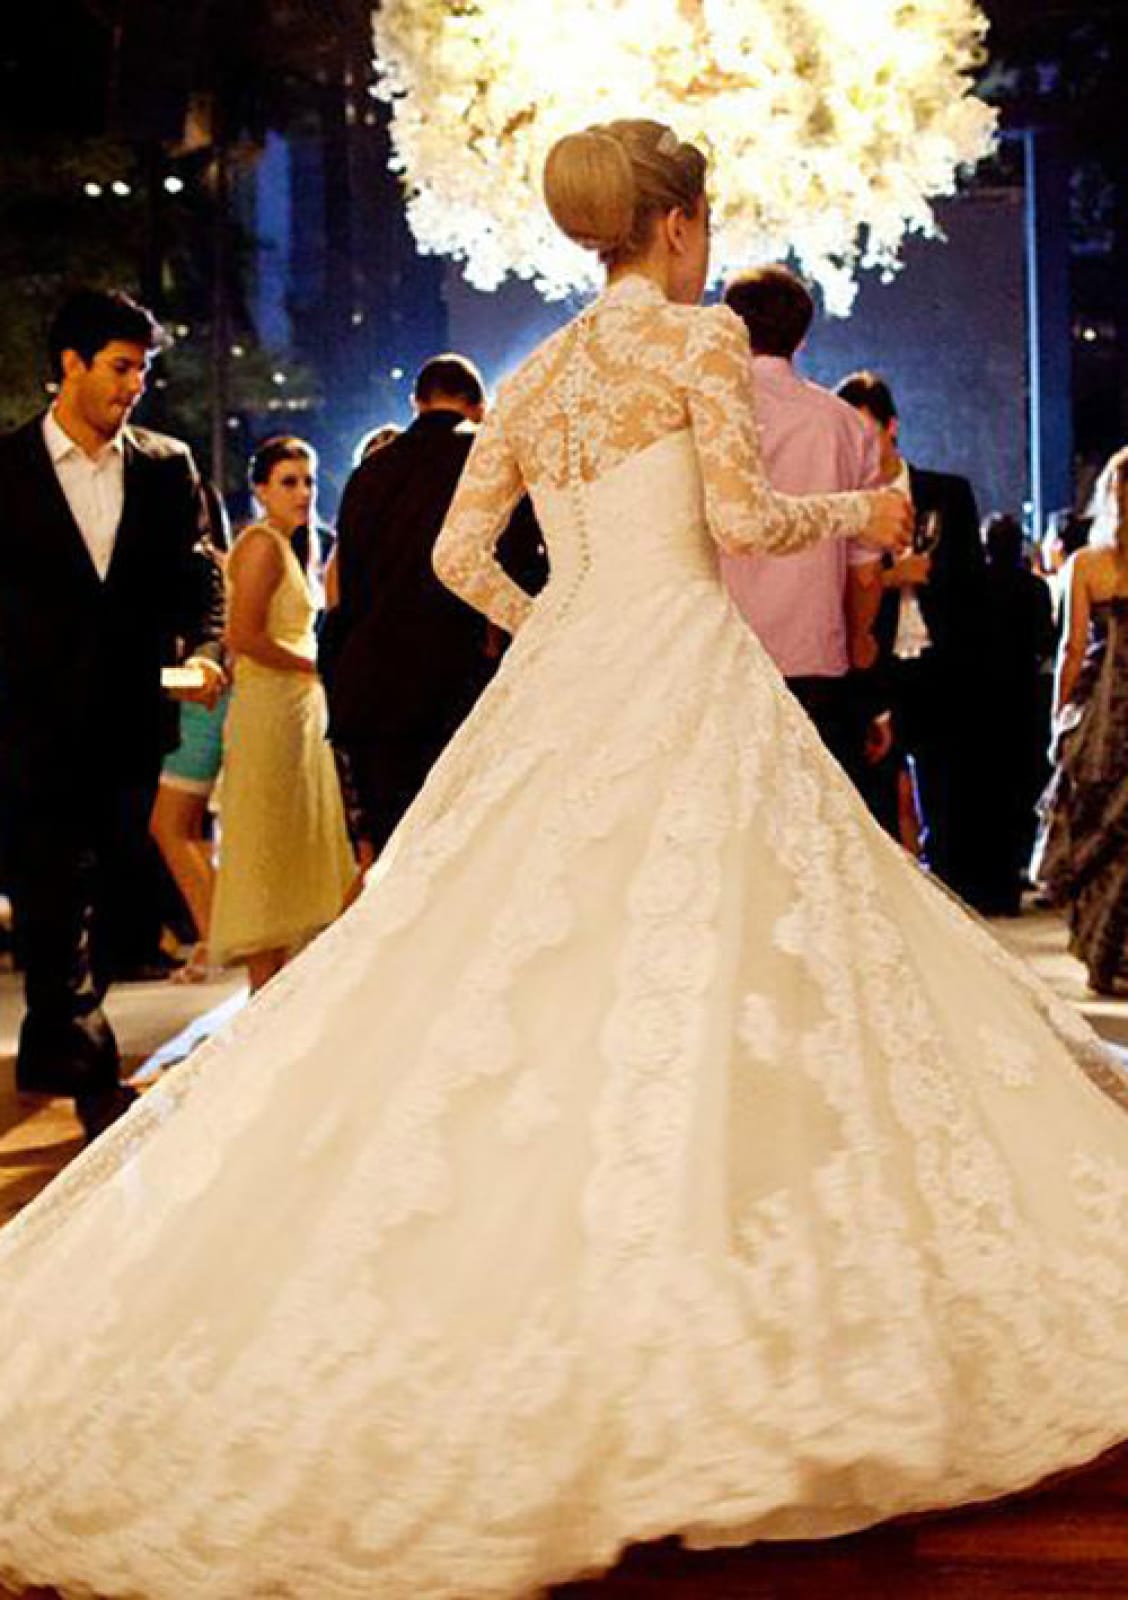 A-line Long Sleeve Button V Neck Chapel Lace Wedding Dress